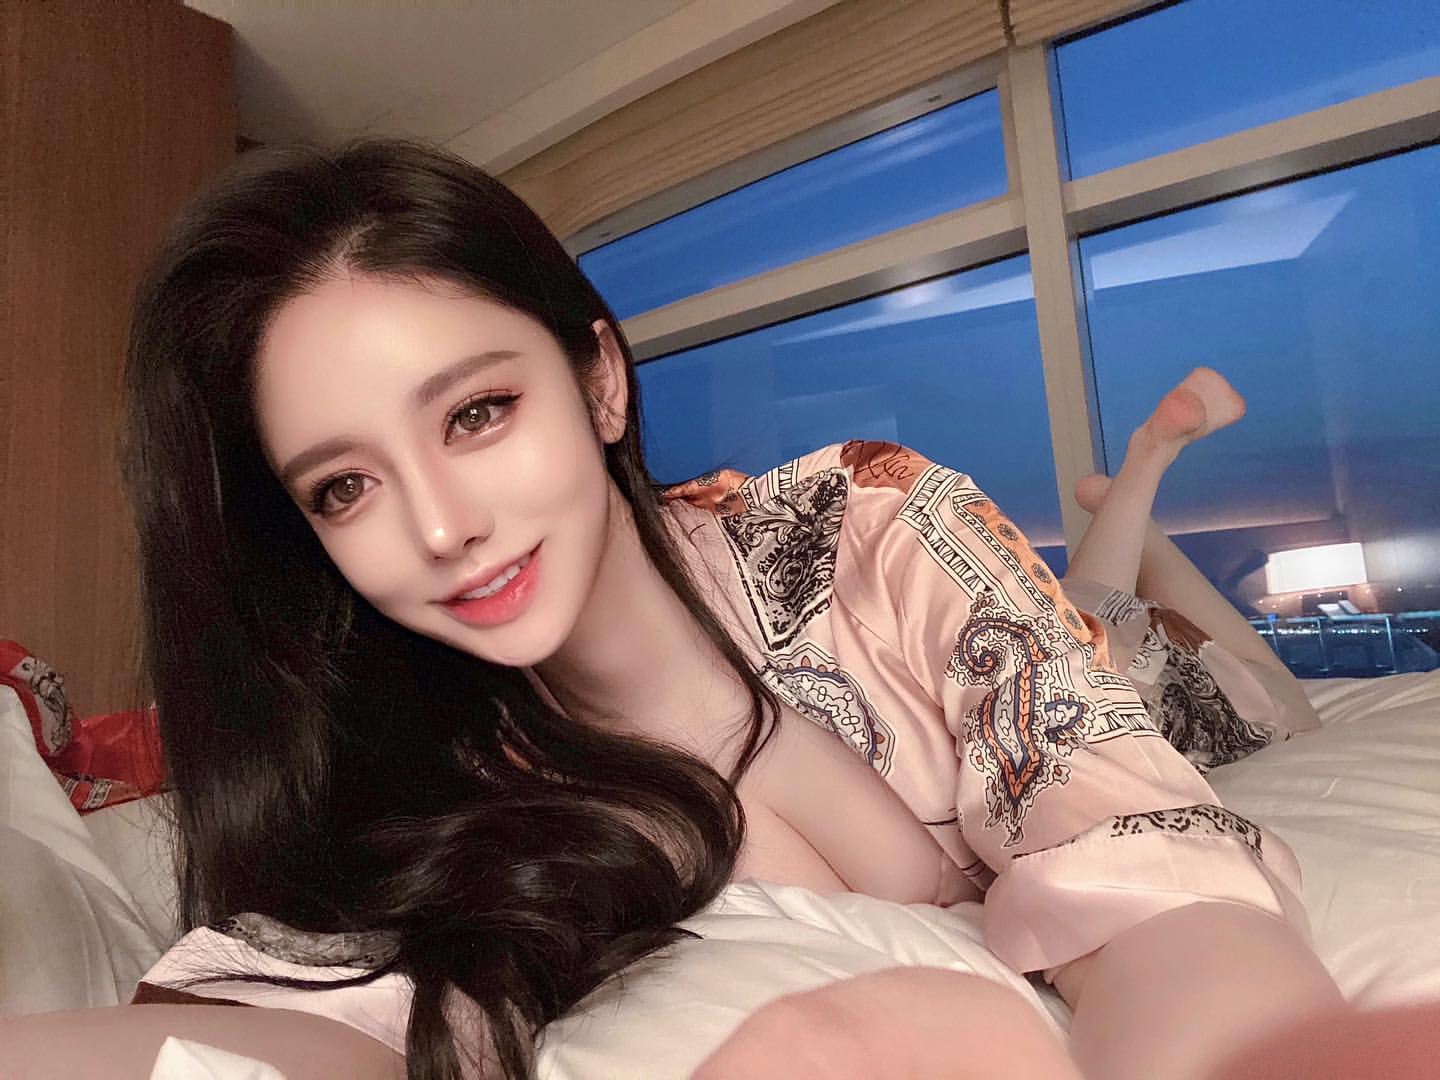 Instagram Bjaewww Bjaewww Jaewoneey Jaewoneey J 美女 正妹 아름다움 Beauty Cute Girls Photos From Instagram Weibo Etc